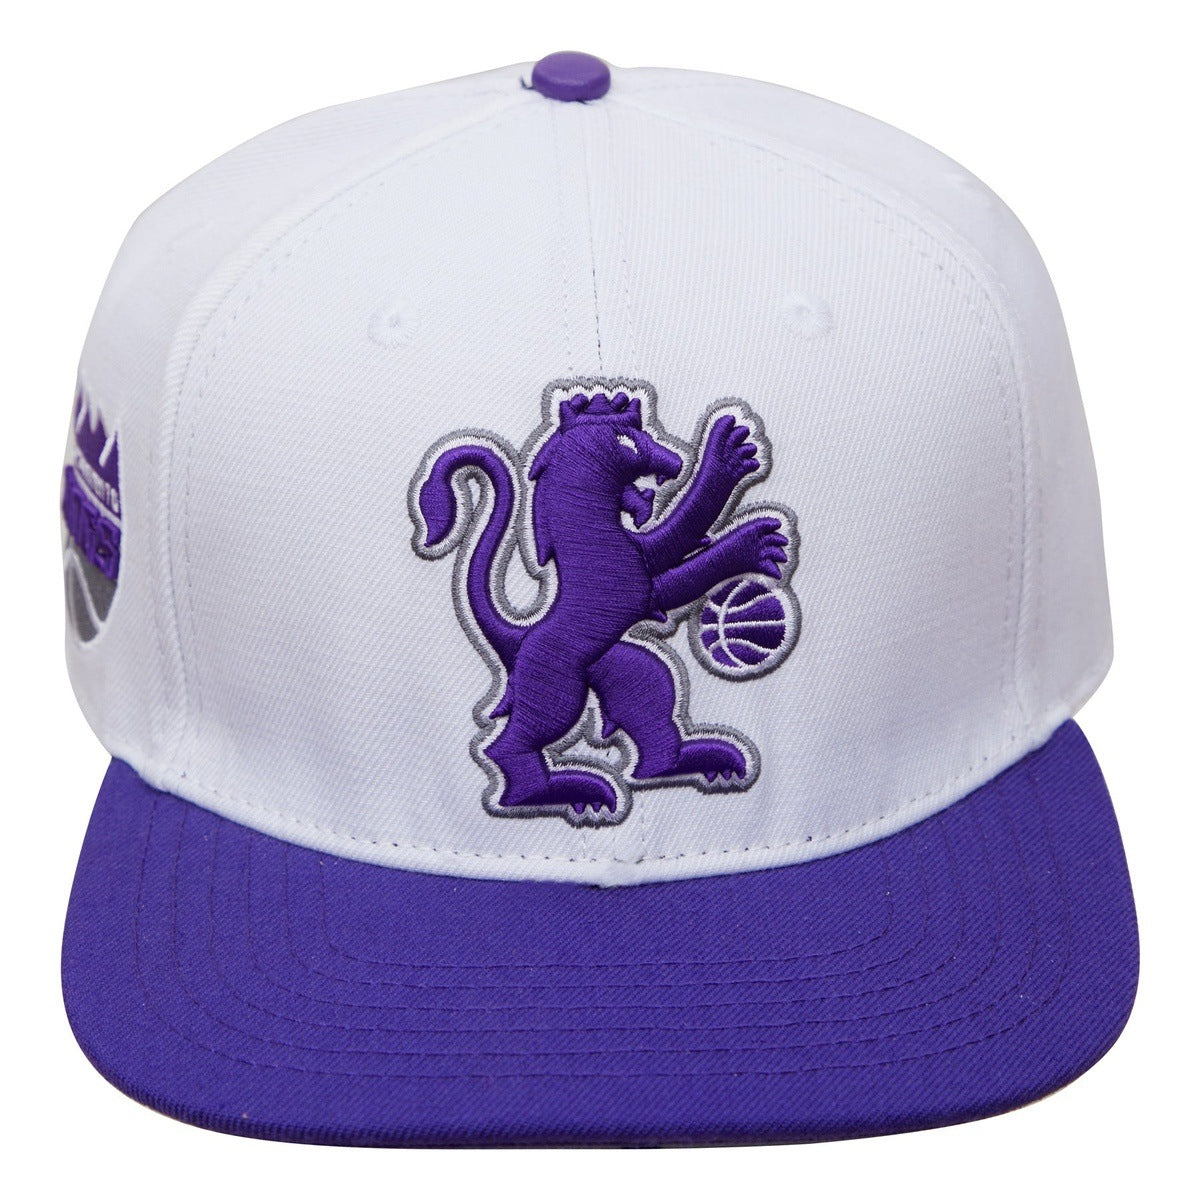 Sacramento Kings Hats, Mens Kings Caps, Beanie, Snapbacks